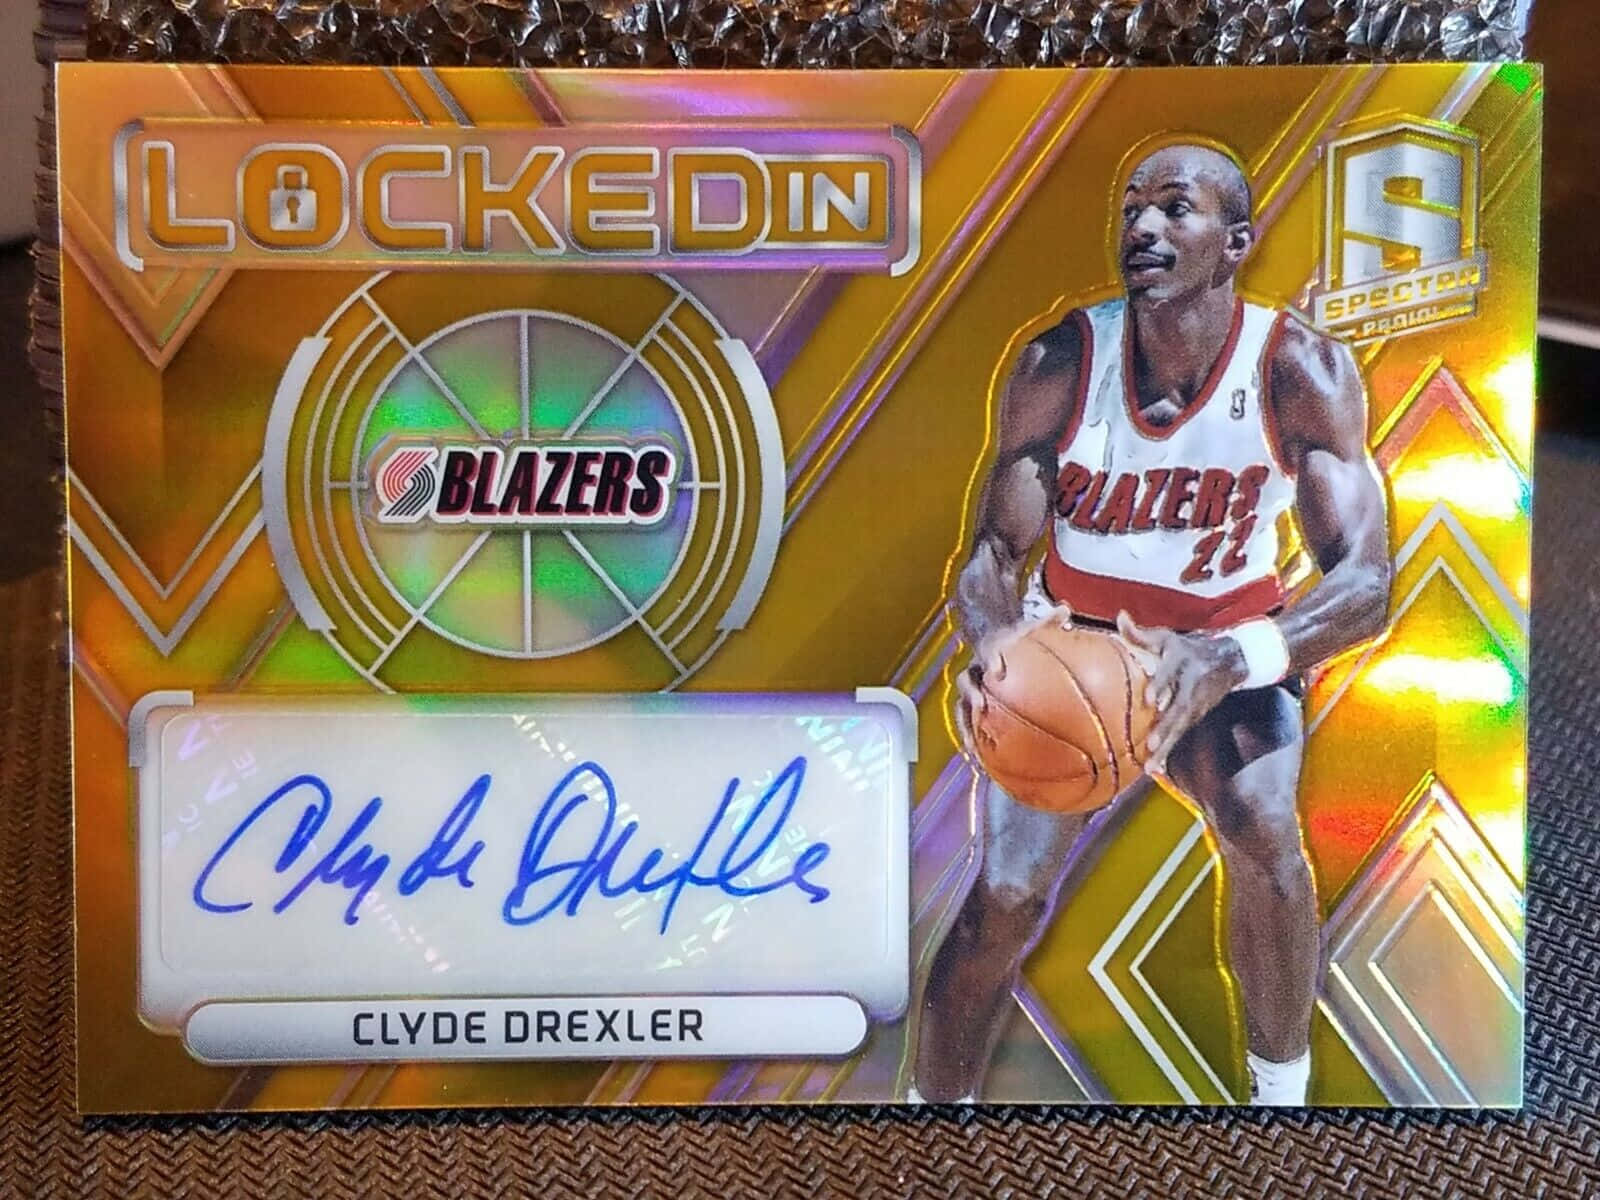 Clyde Drexler Nba Player Autographed Photo Card Wallpaper